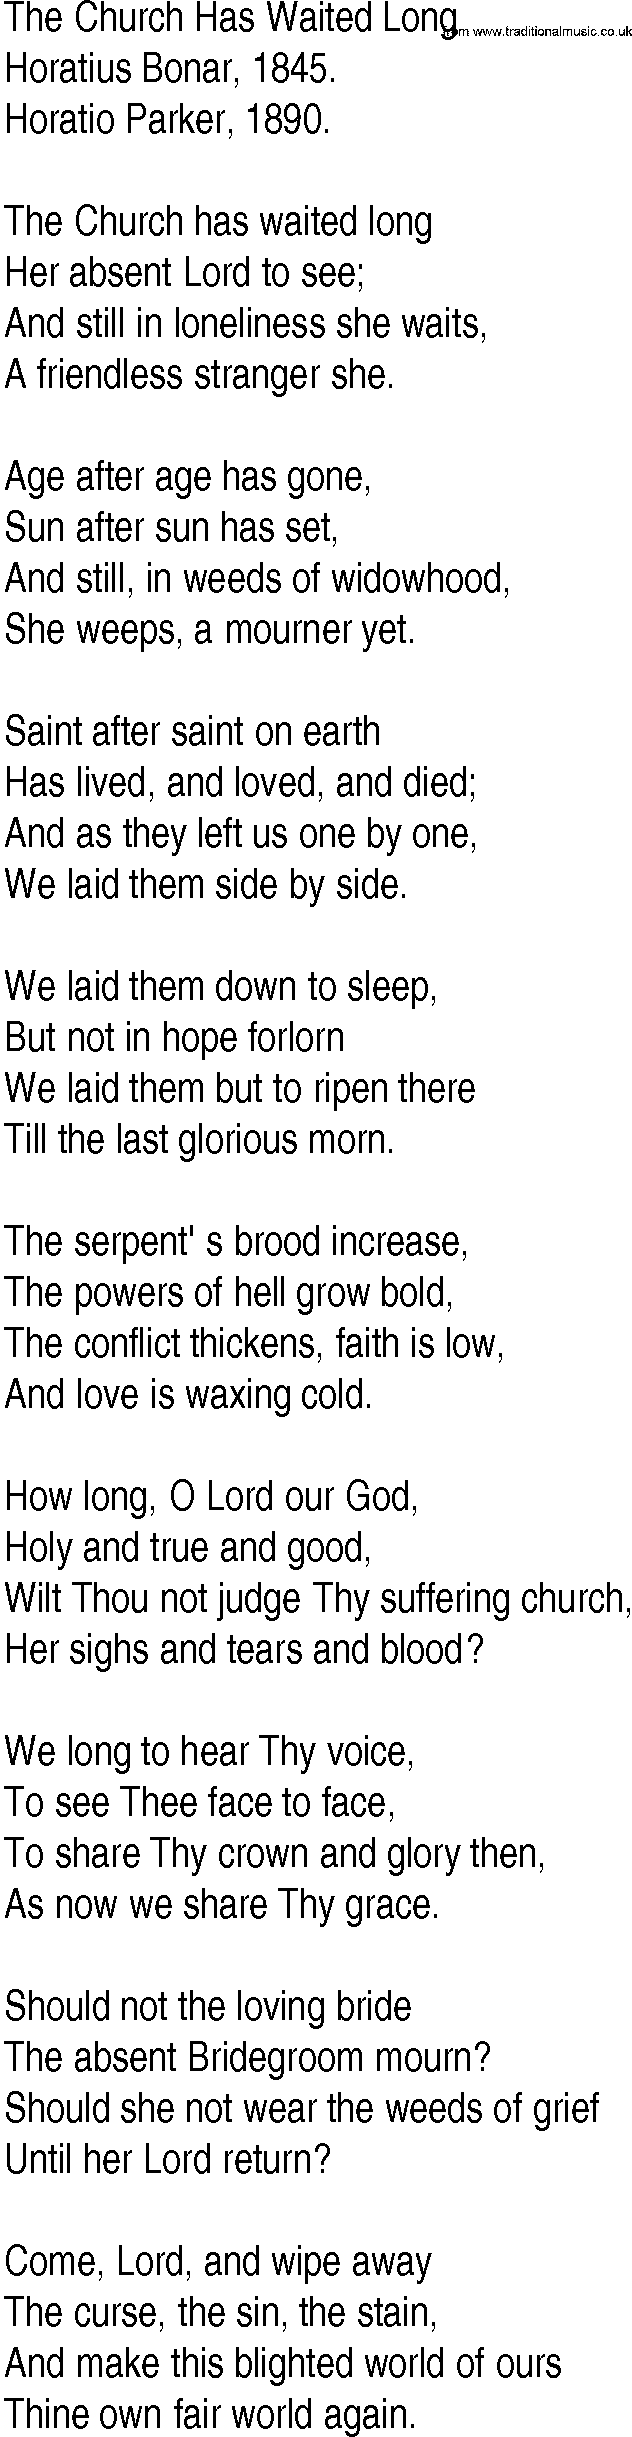 Hymn and Gospel Song: The Church Has Waited Long by Horatius Bonar lyrics